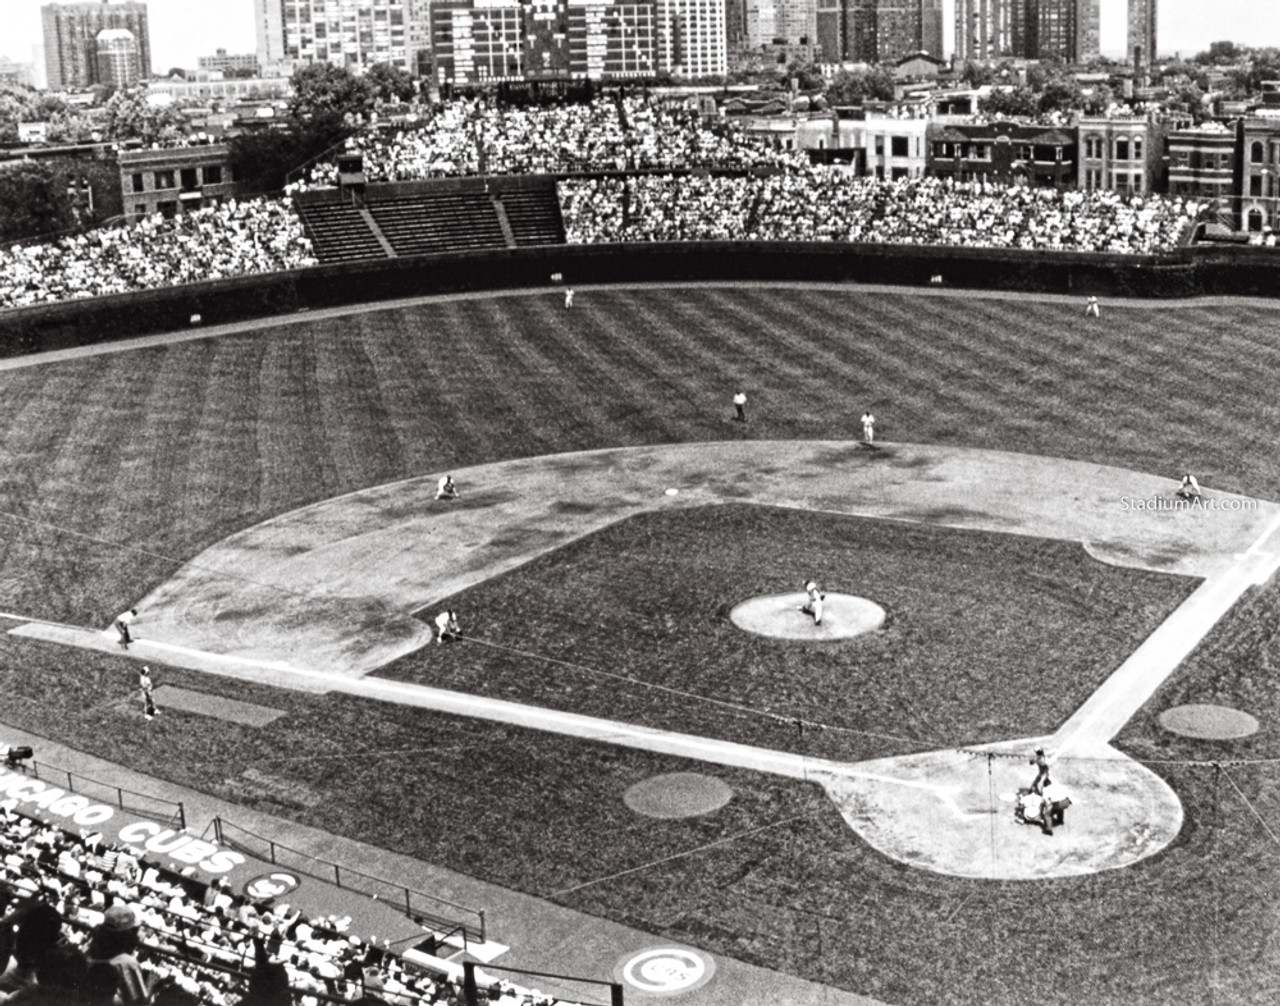 Chicago Cubs Wrigley Field Baseball Stadium Historic 8x10 to 48x36 photos 55